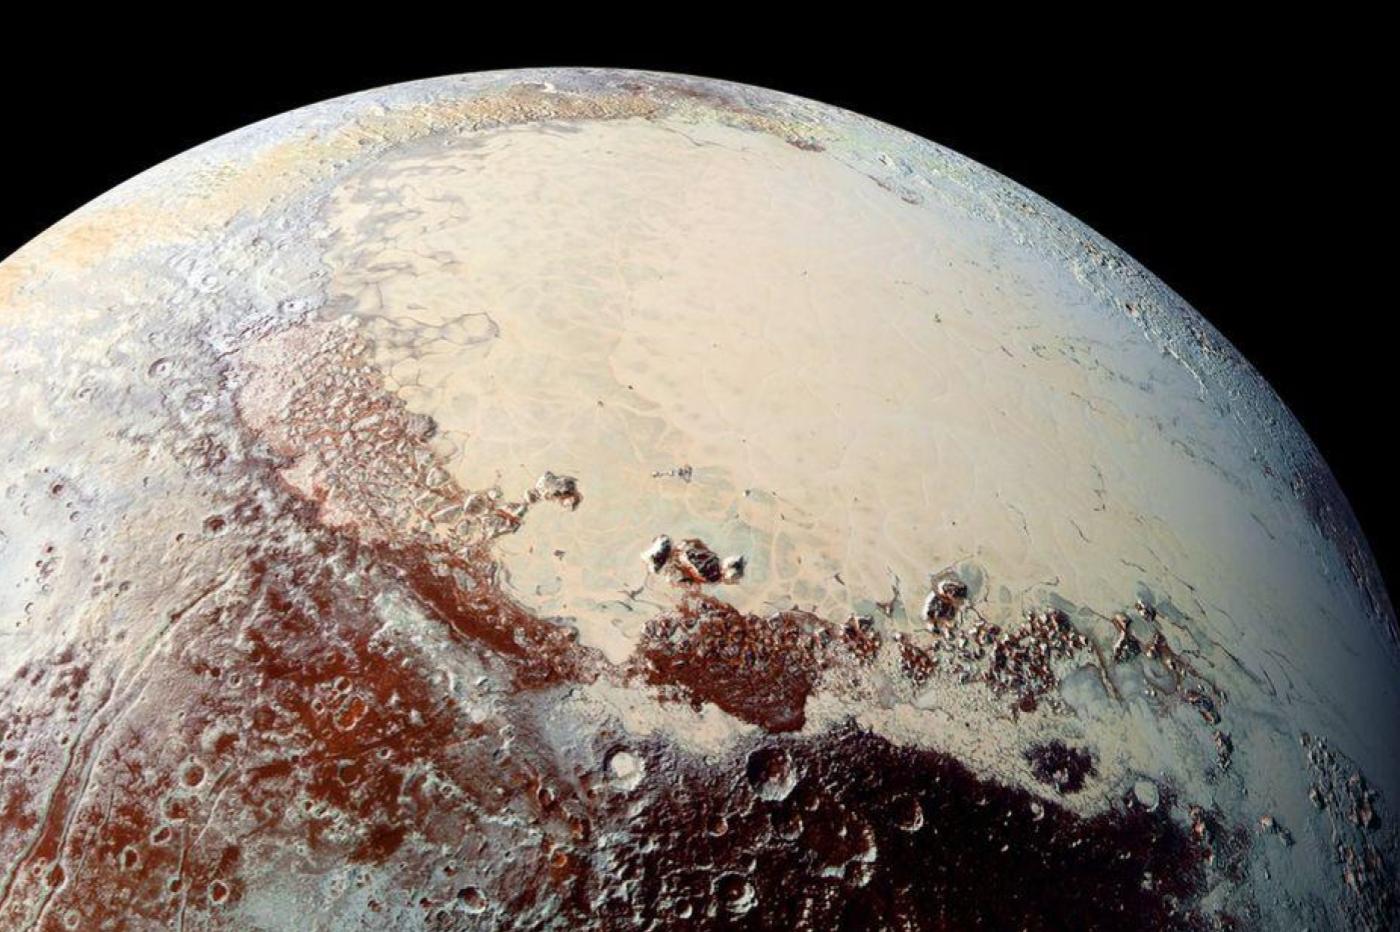 La Sputnik Planitia de Pluton